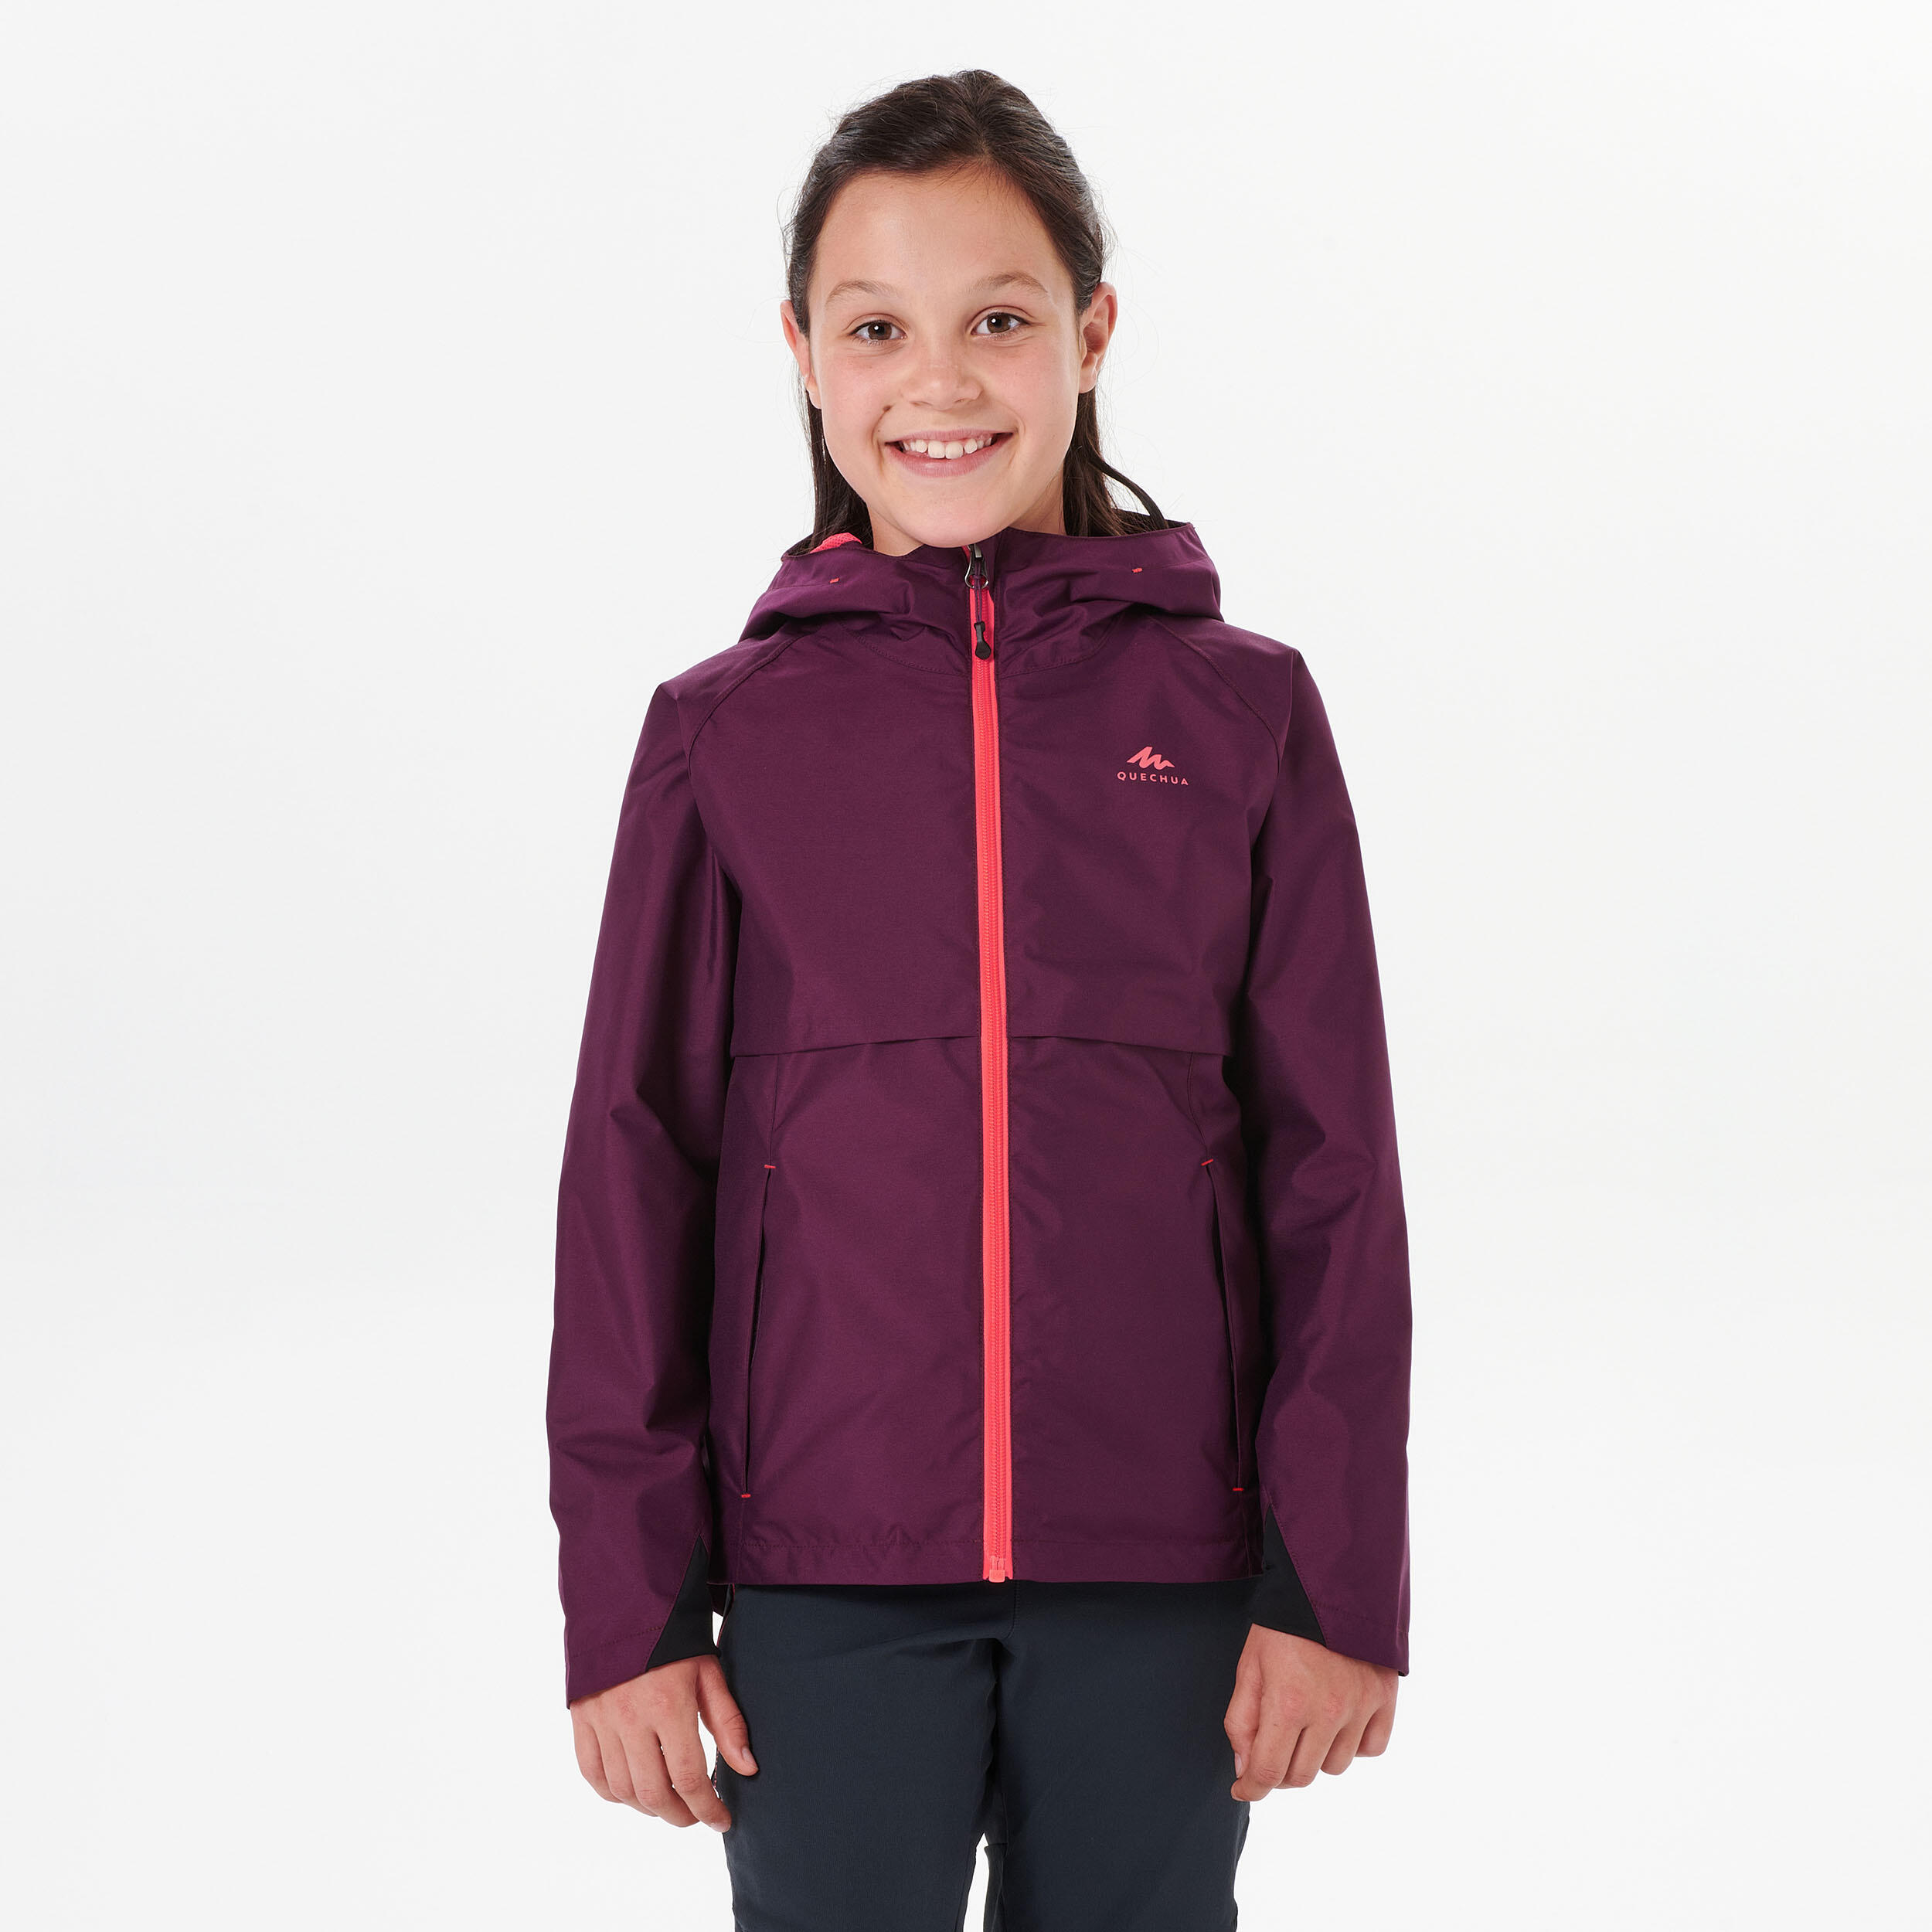 Kids’ Waterproof Hiking Jacket - MH500 Aged 7-15 - Plum 8/14